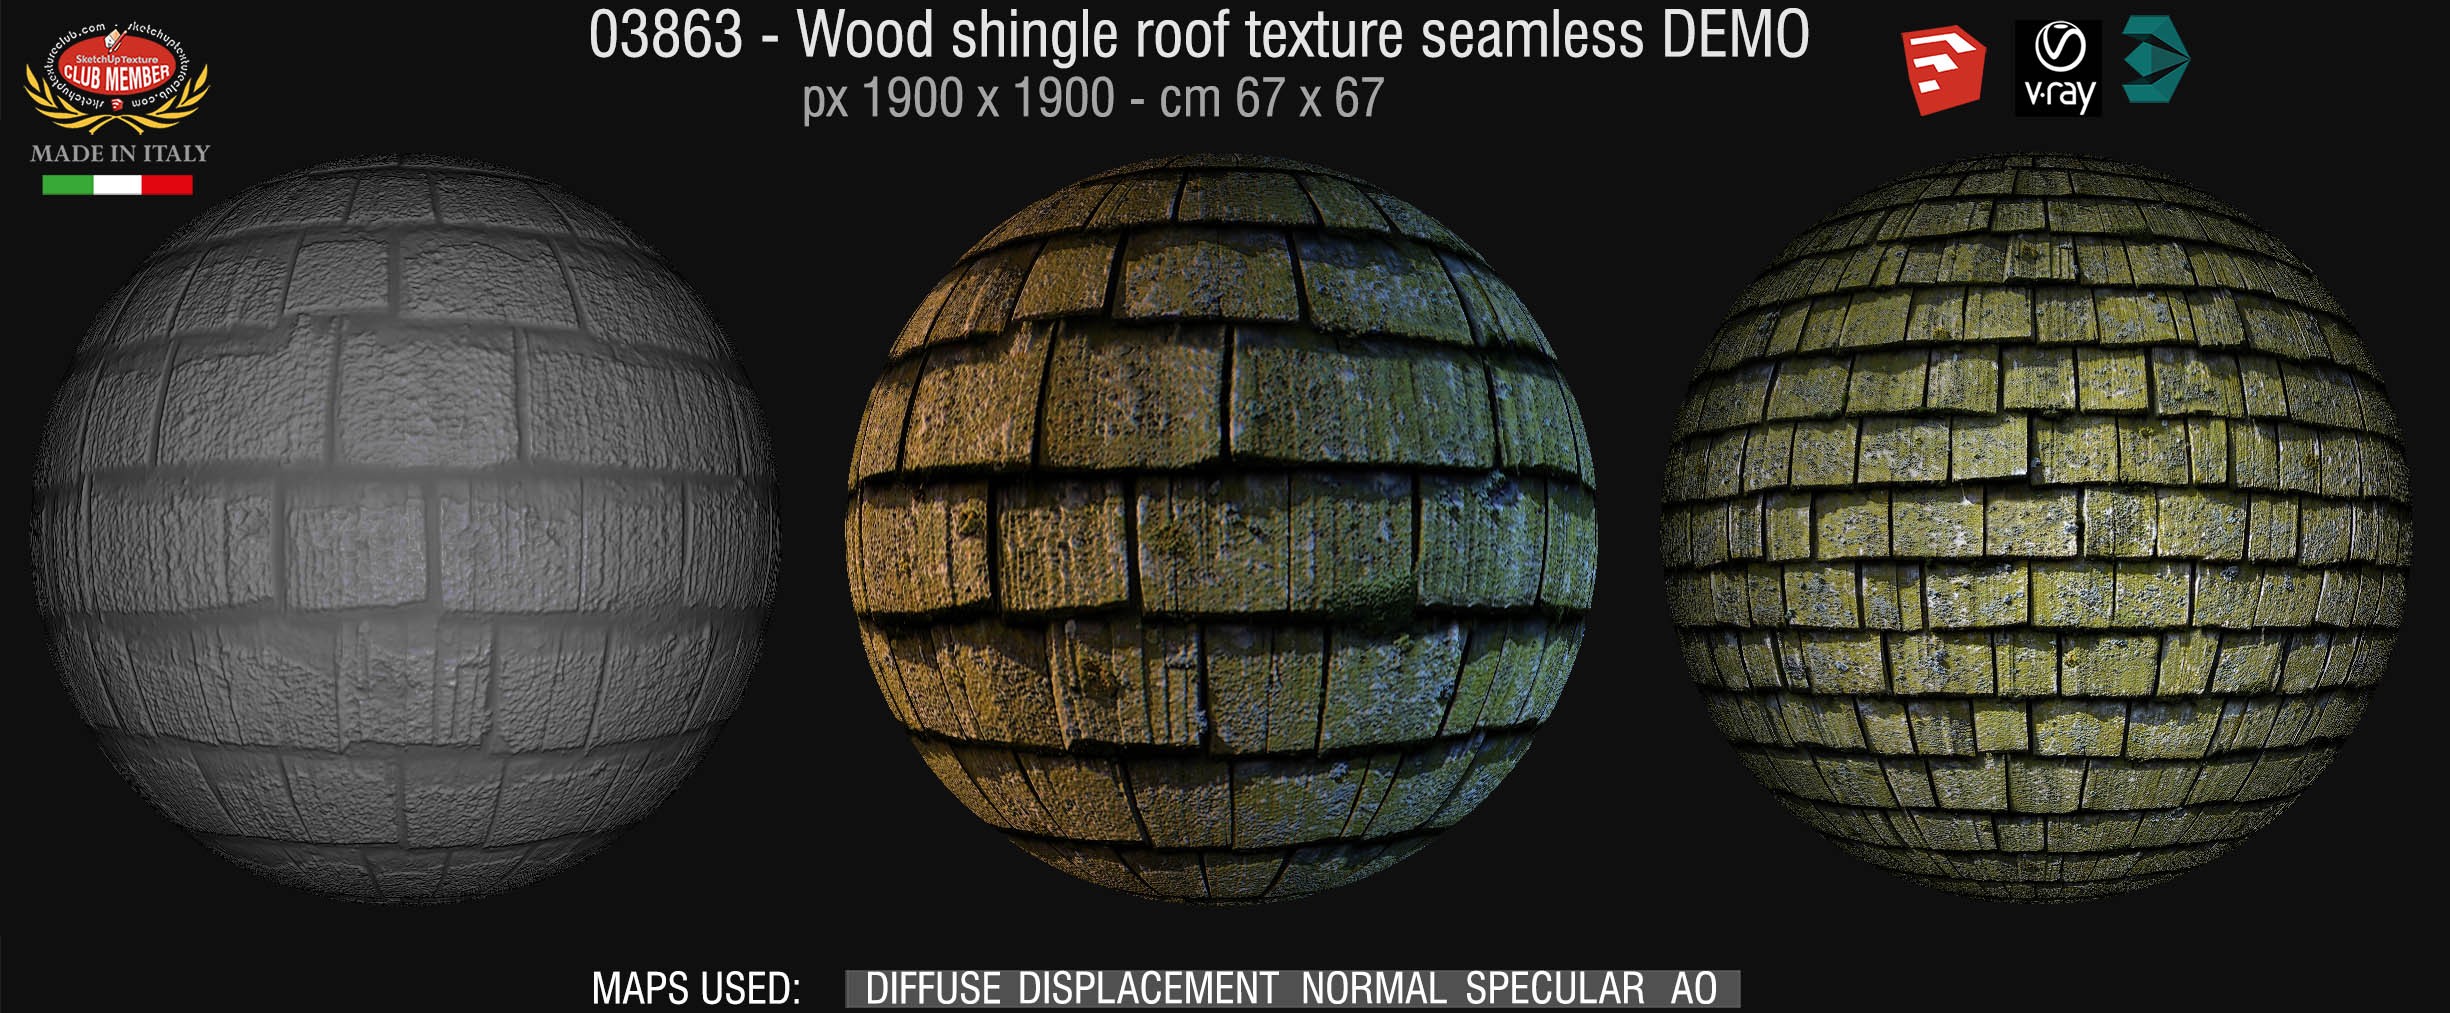 03863 Wood shingle roof texture seamless + maps DEMO